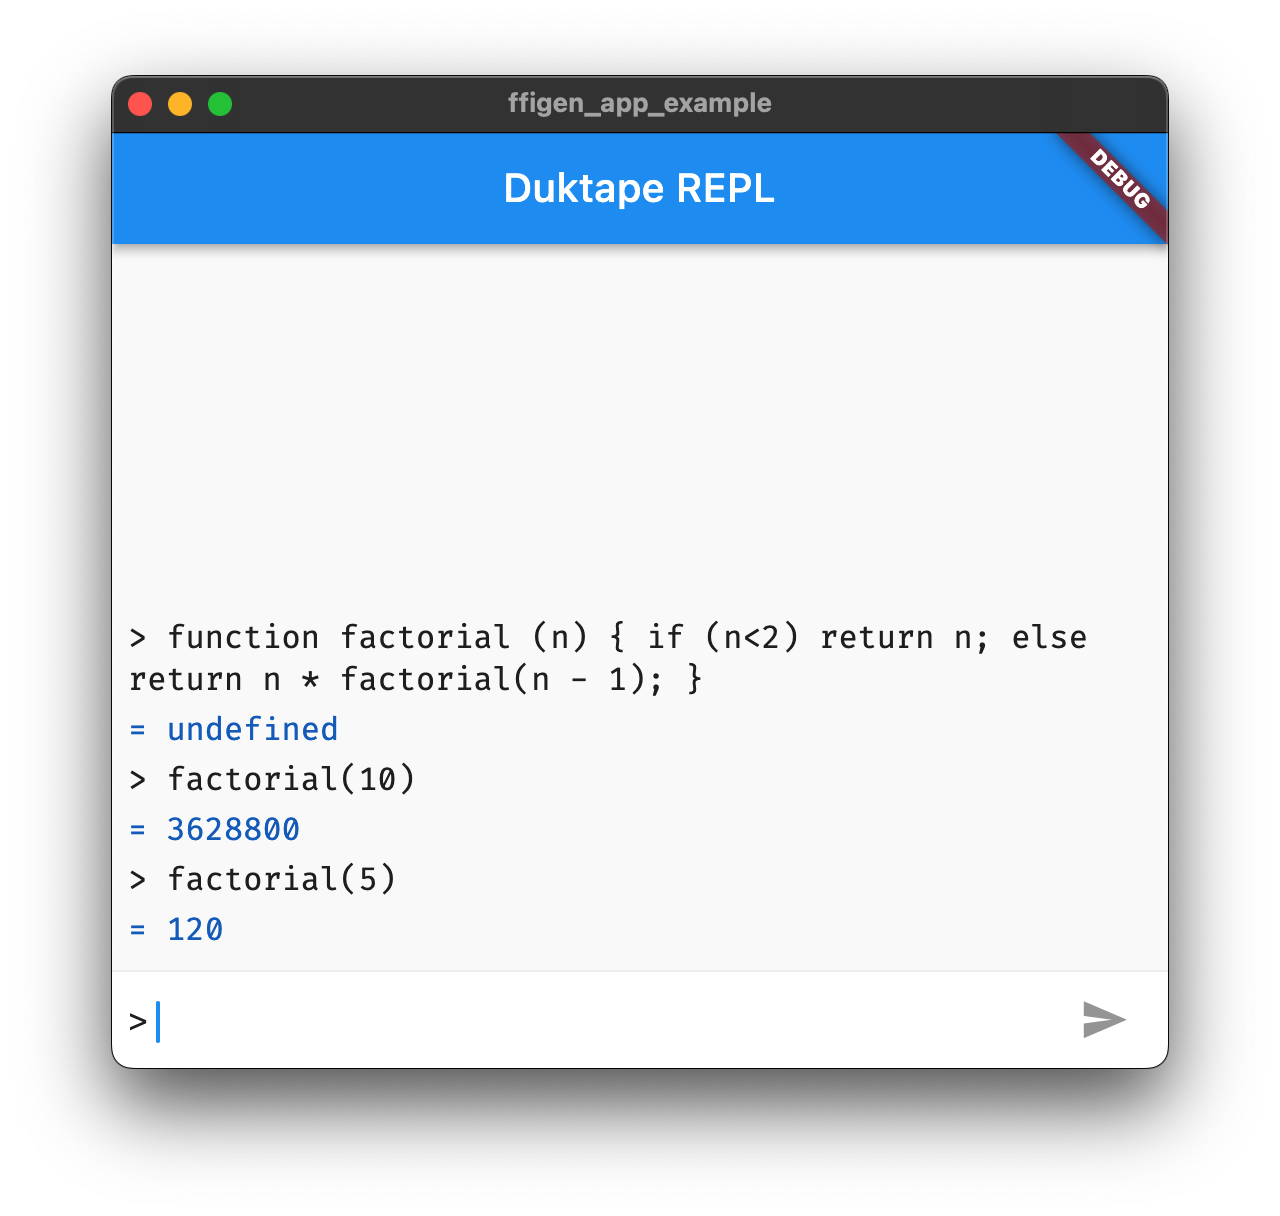 Duktape REPL running in a Linux application